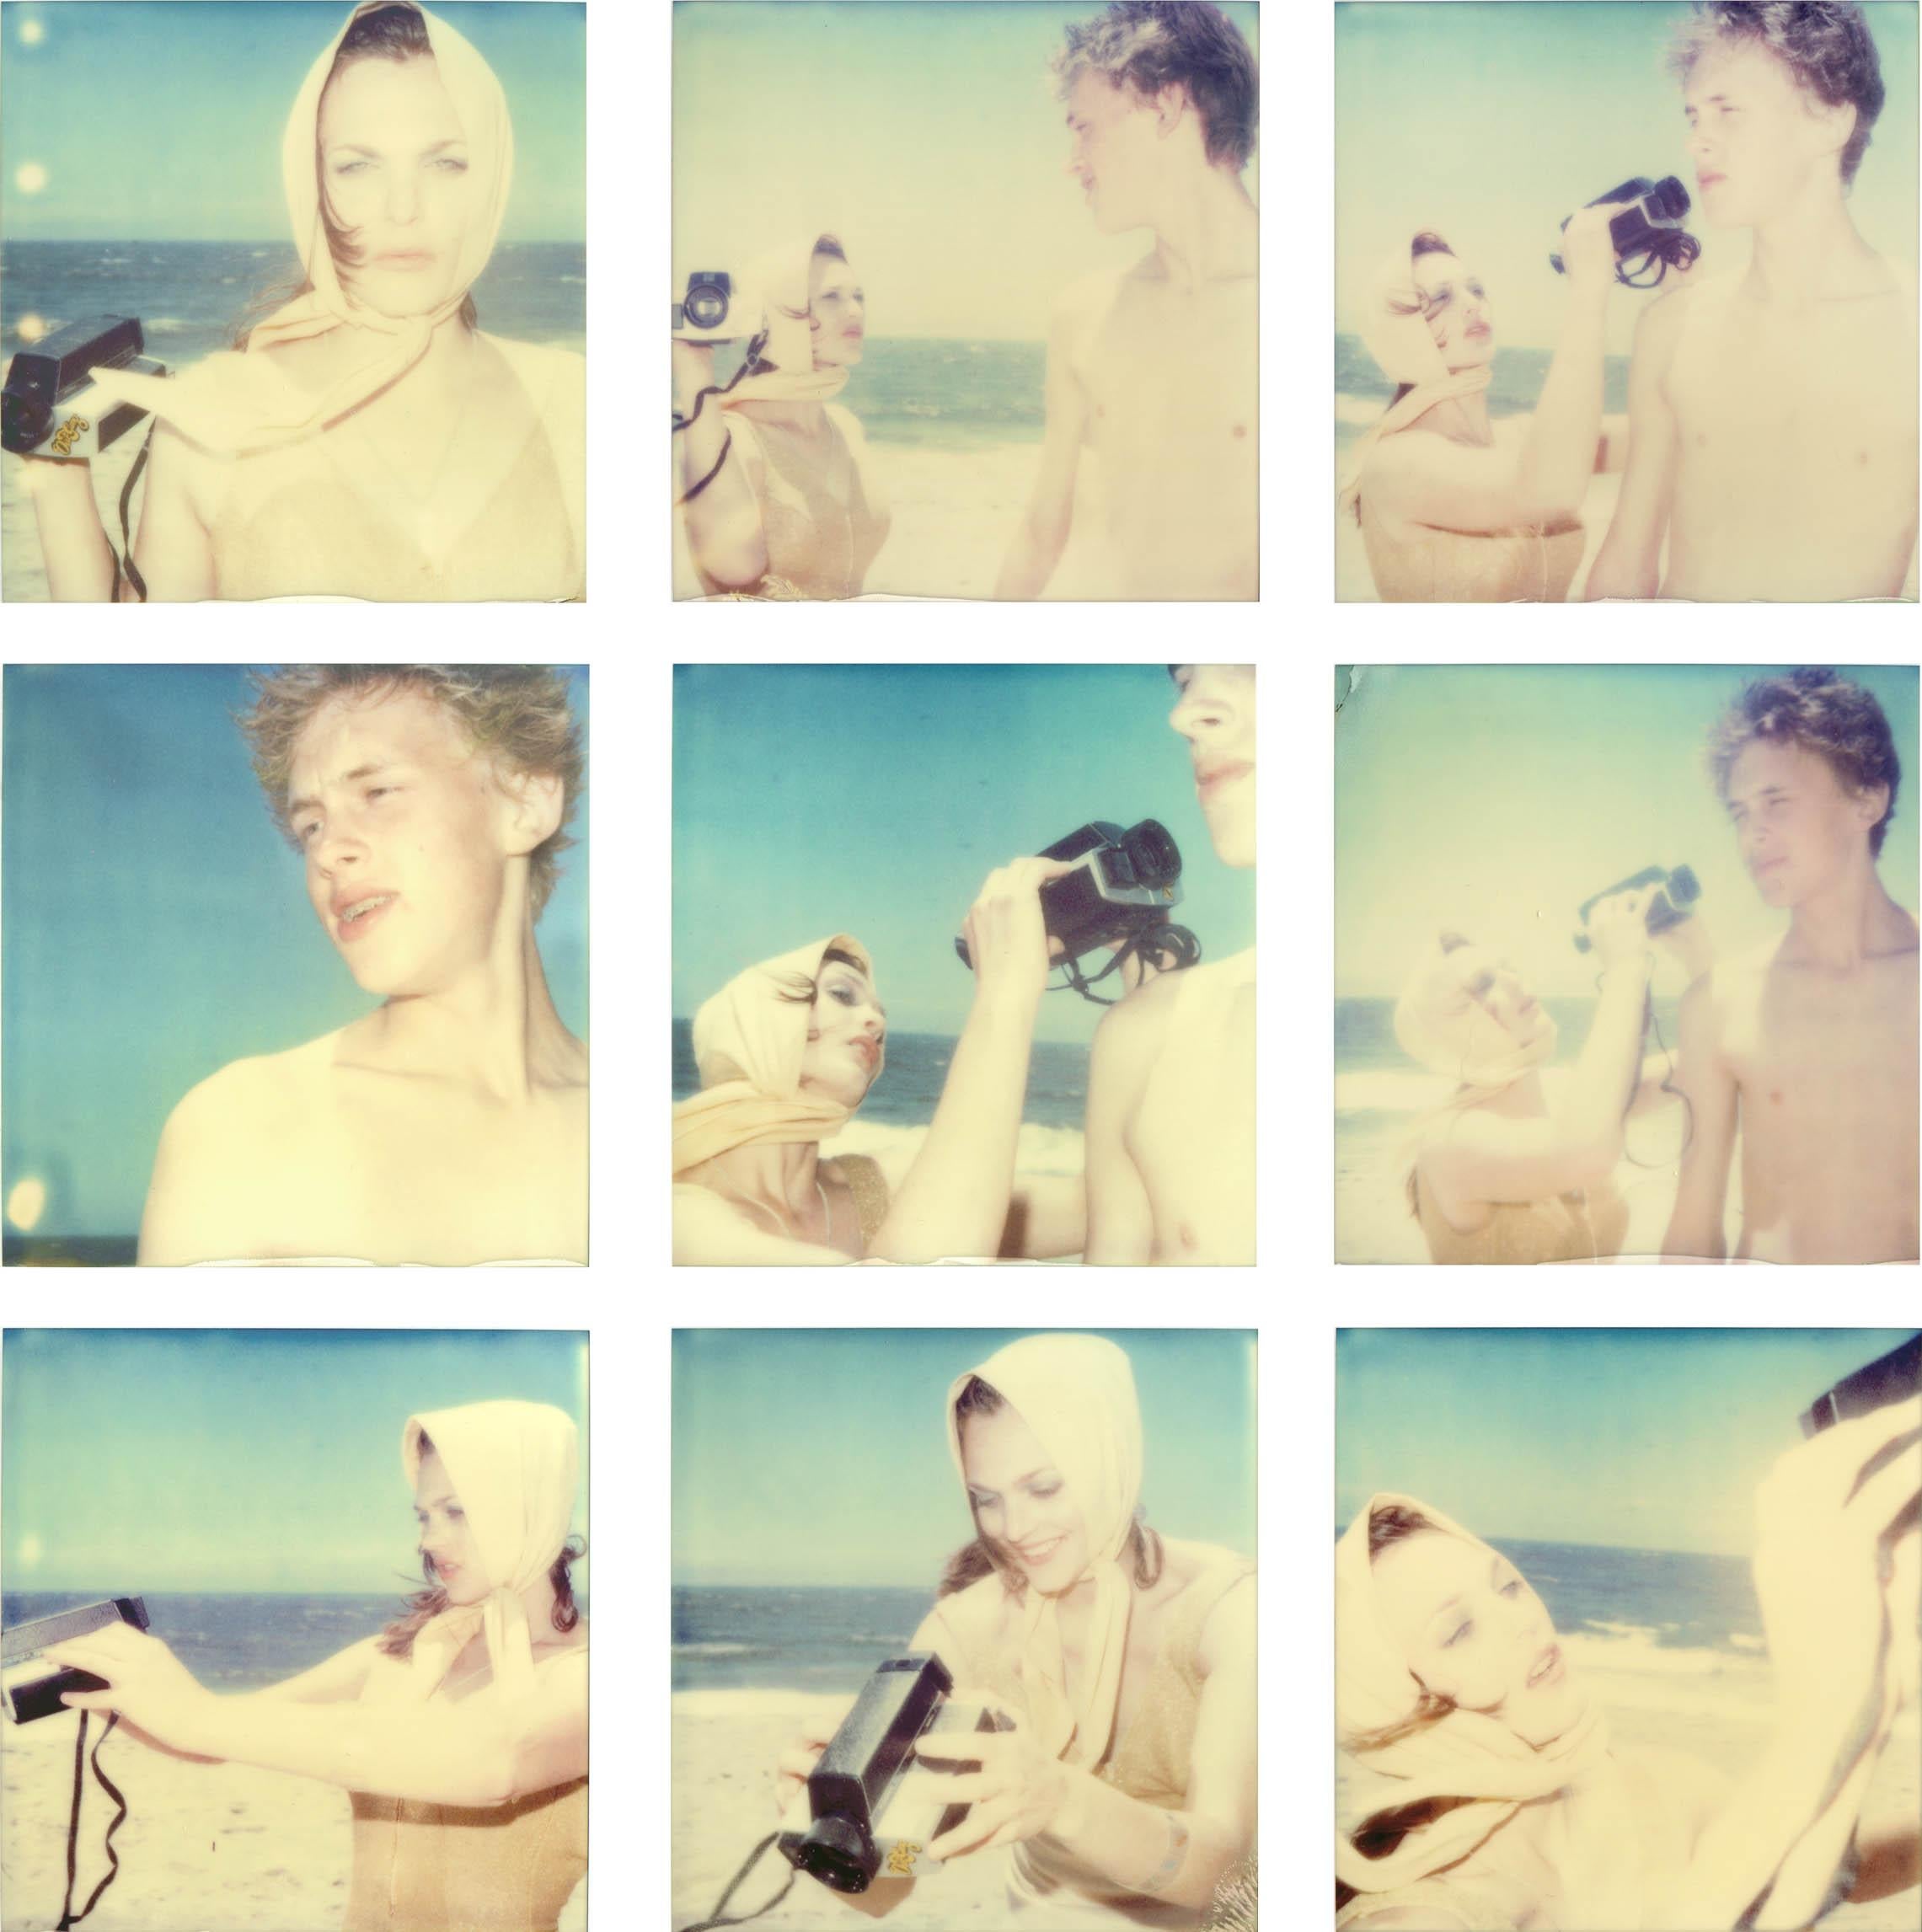 Stefanie Schneider Portrait Photograph - The Diva and the Boy (Beachshoot) - 9 pieces - Polaroid, Vintage, Contemporary